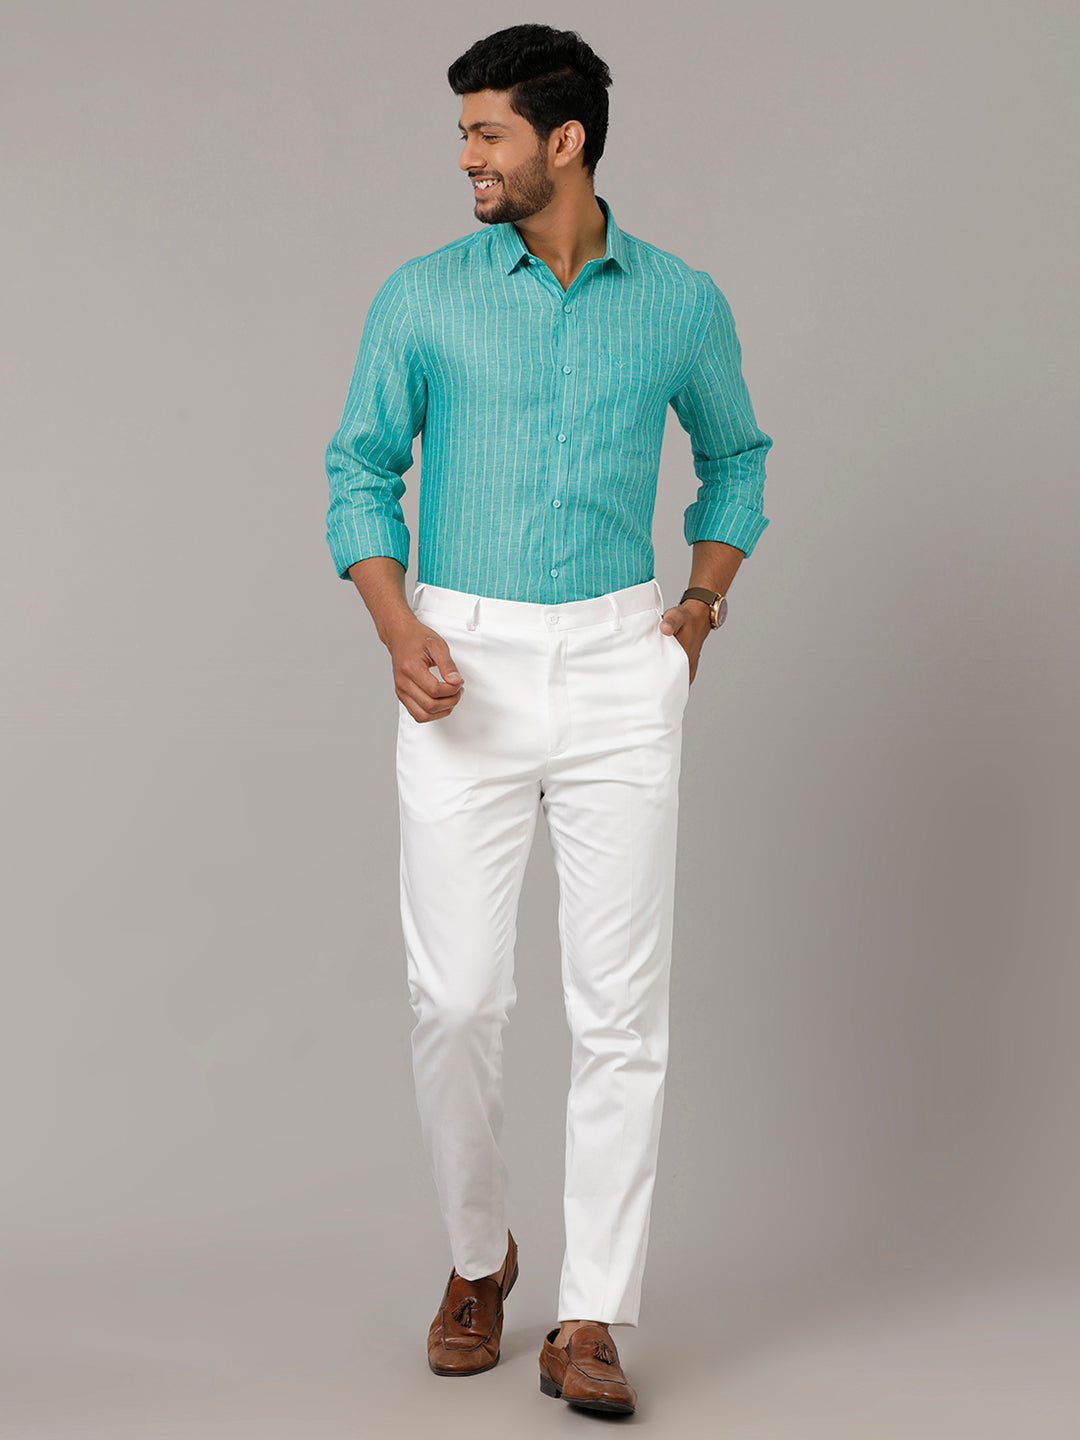 Men's spring summer outfit with green botanical shirt, white plain cotton  pants, white plain damaged jeans, white moccasins/deck shoes leather shoes.  | OTOKOMAE